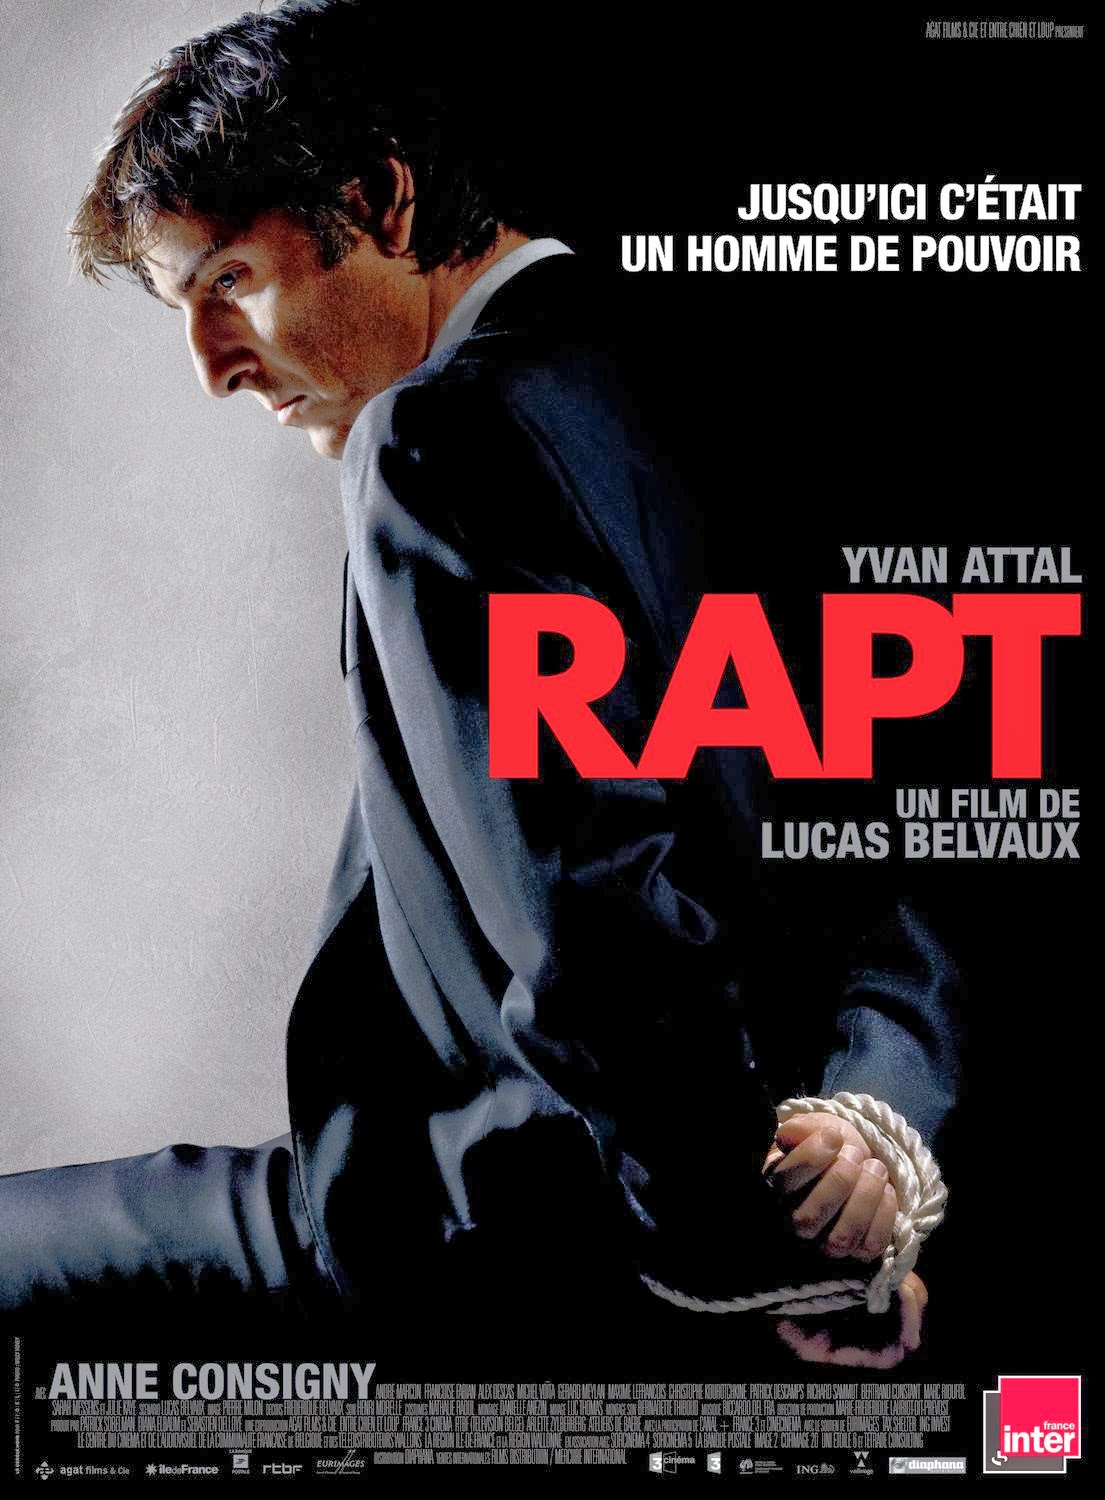 Watch Rapt Online For Free From Putlocker in HD | Watch Putlocker Movies, Download ...1105 x 1500